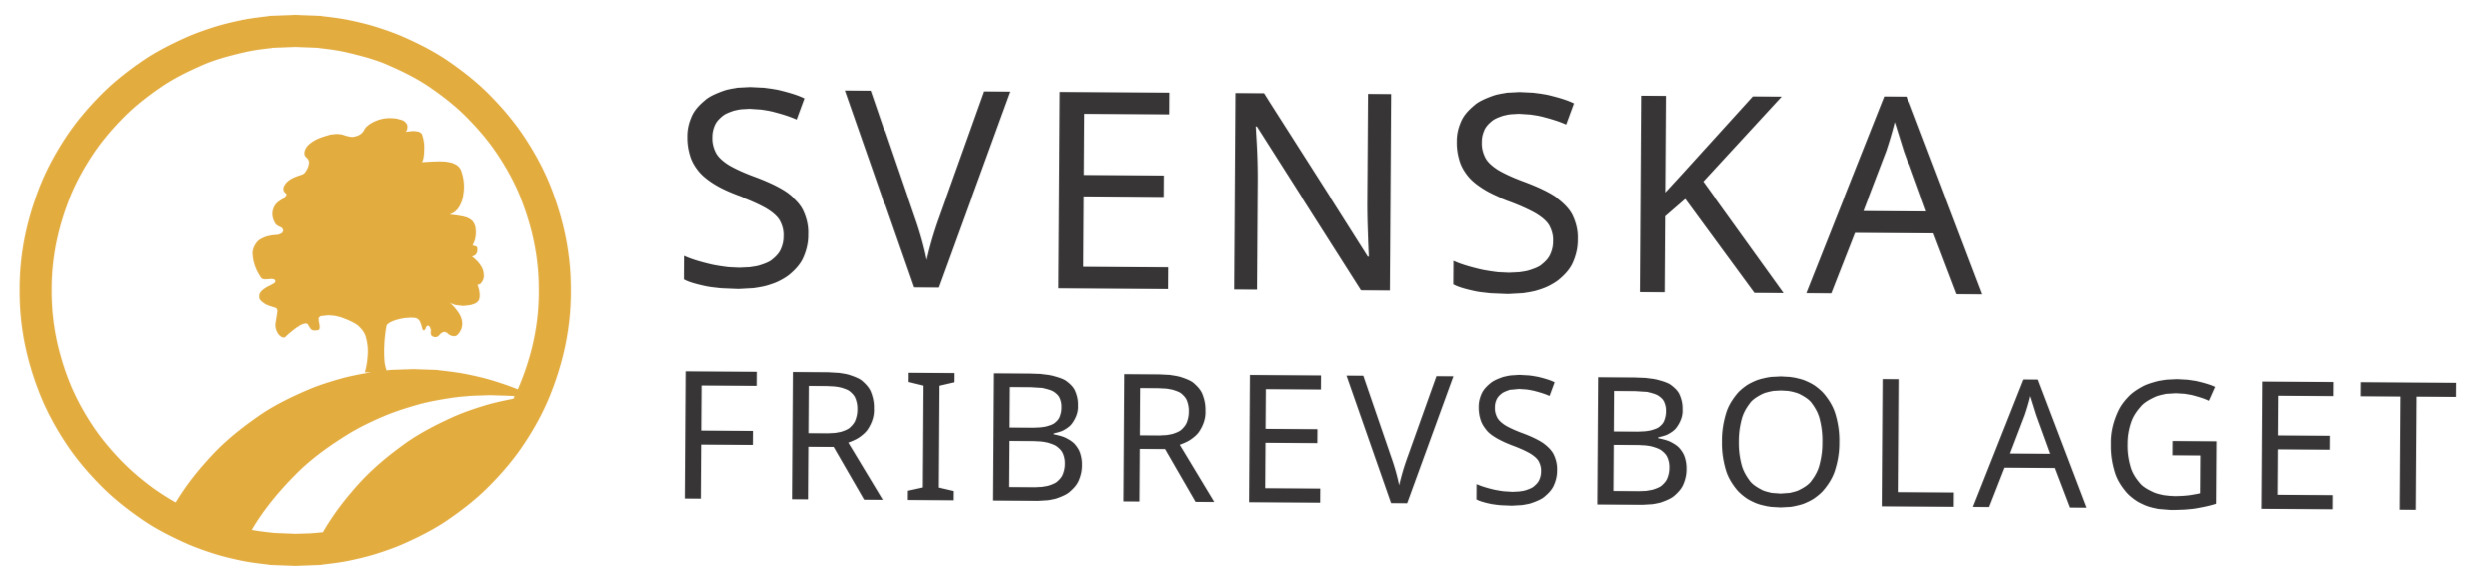 Svenska Fribrevsbolaget logo